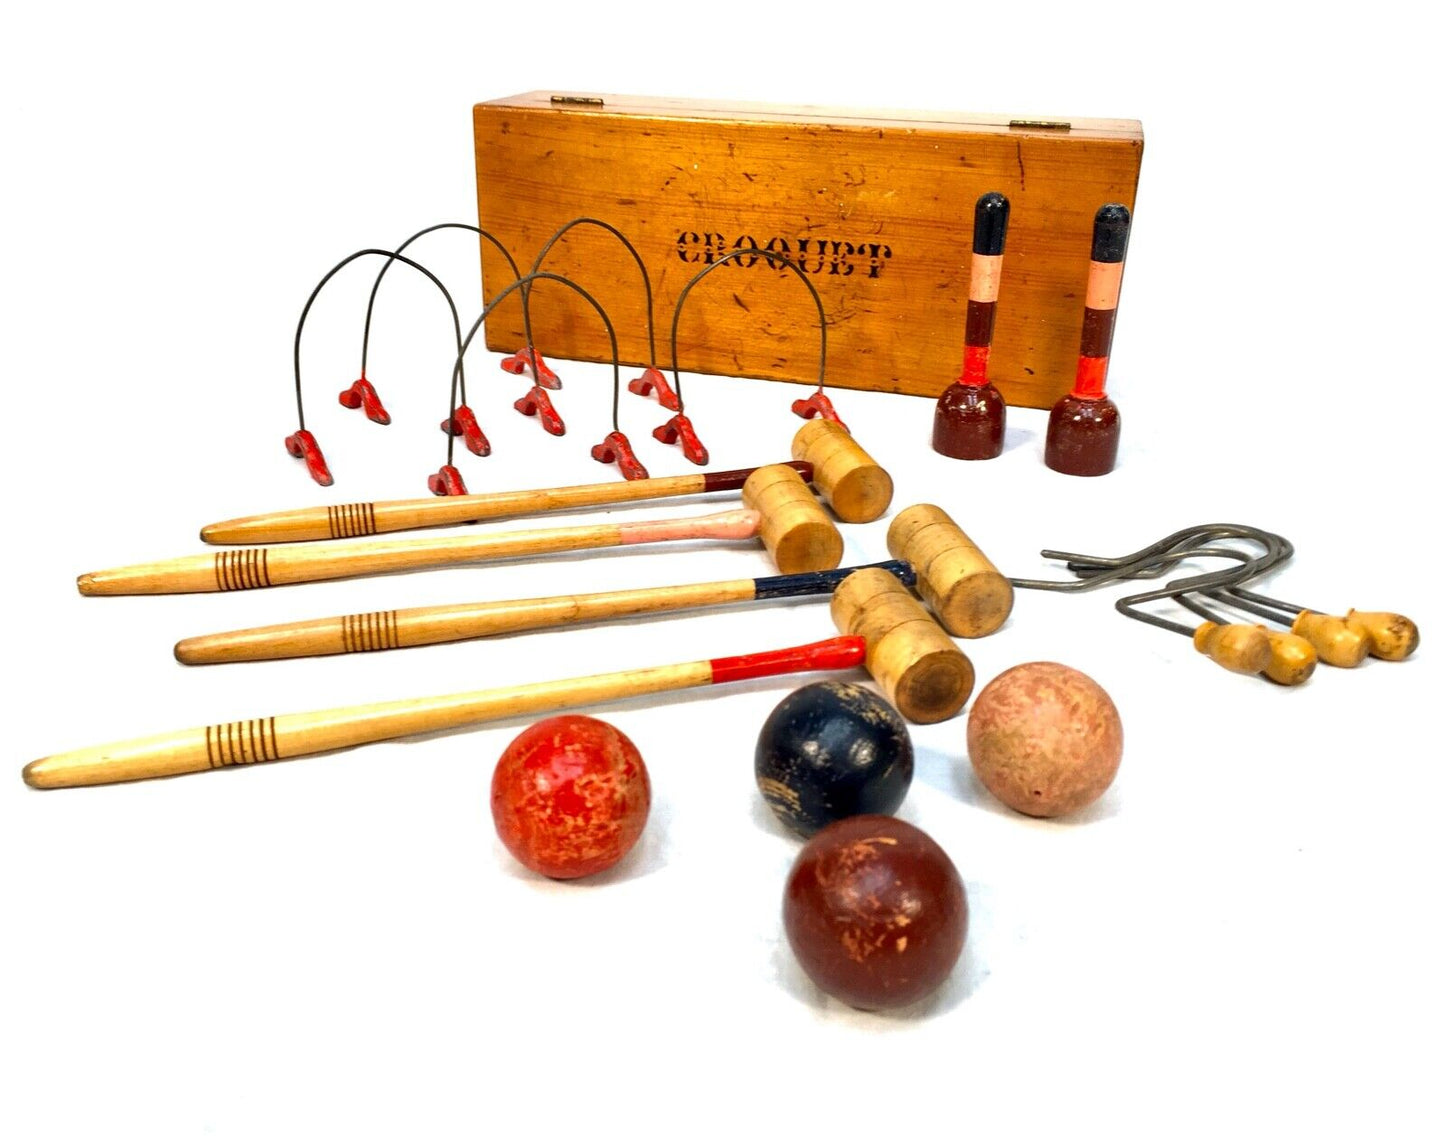 Antique Tabletop Parlour Croquet Game in Wooden Storage Presentation Box / Chest